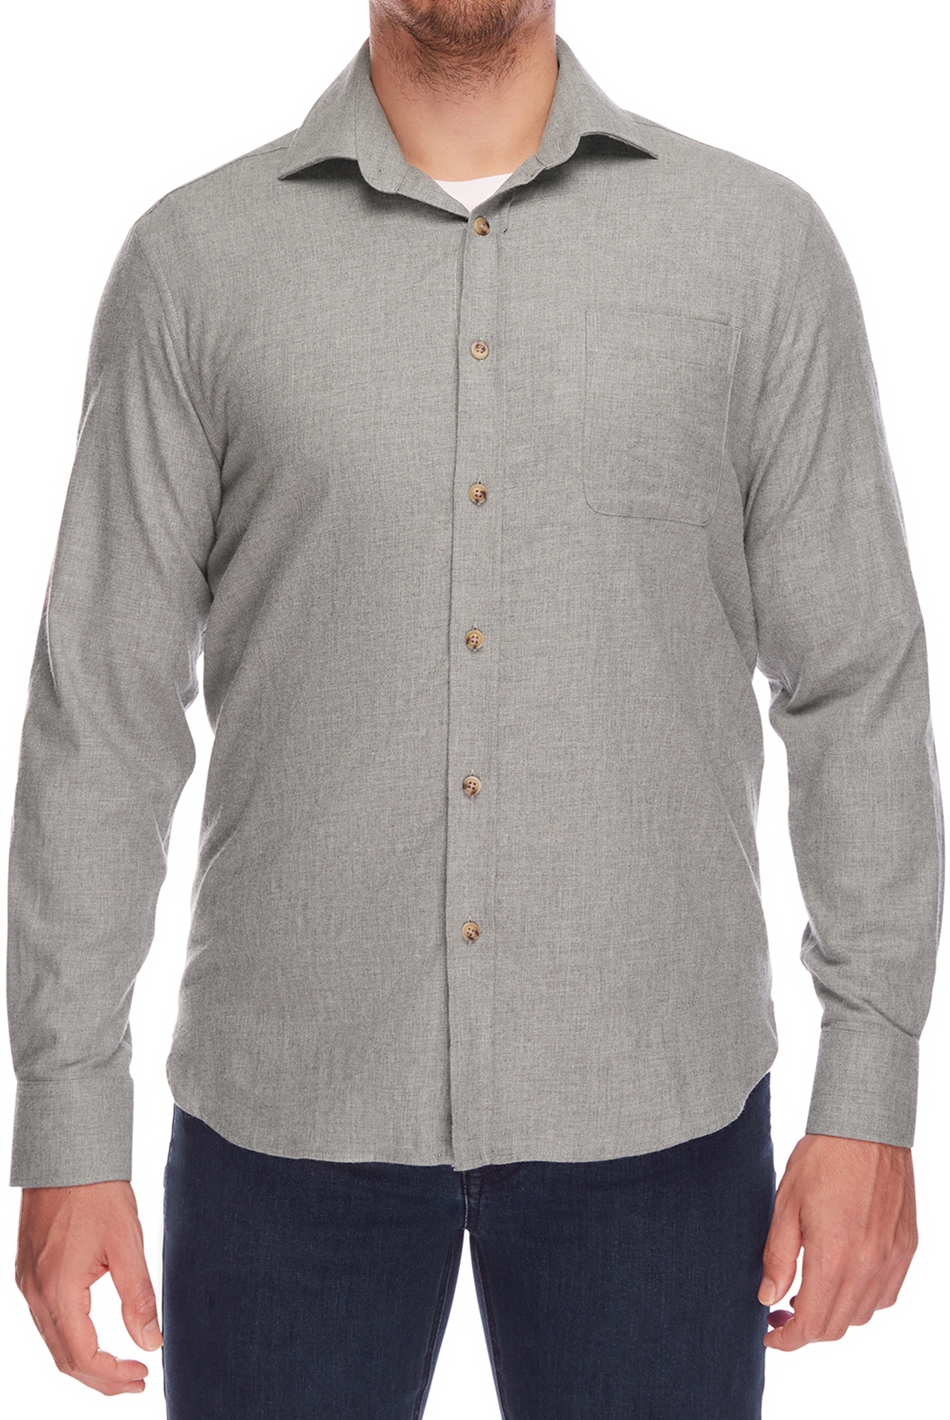 cotton and wool shirt grey